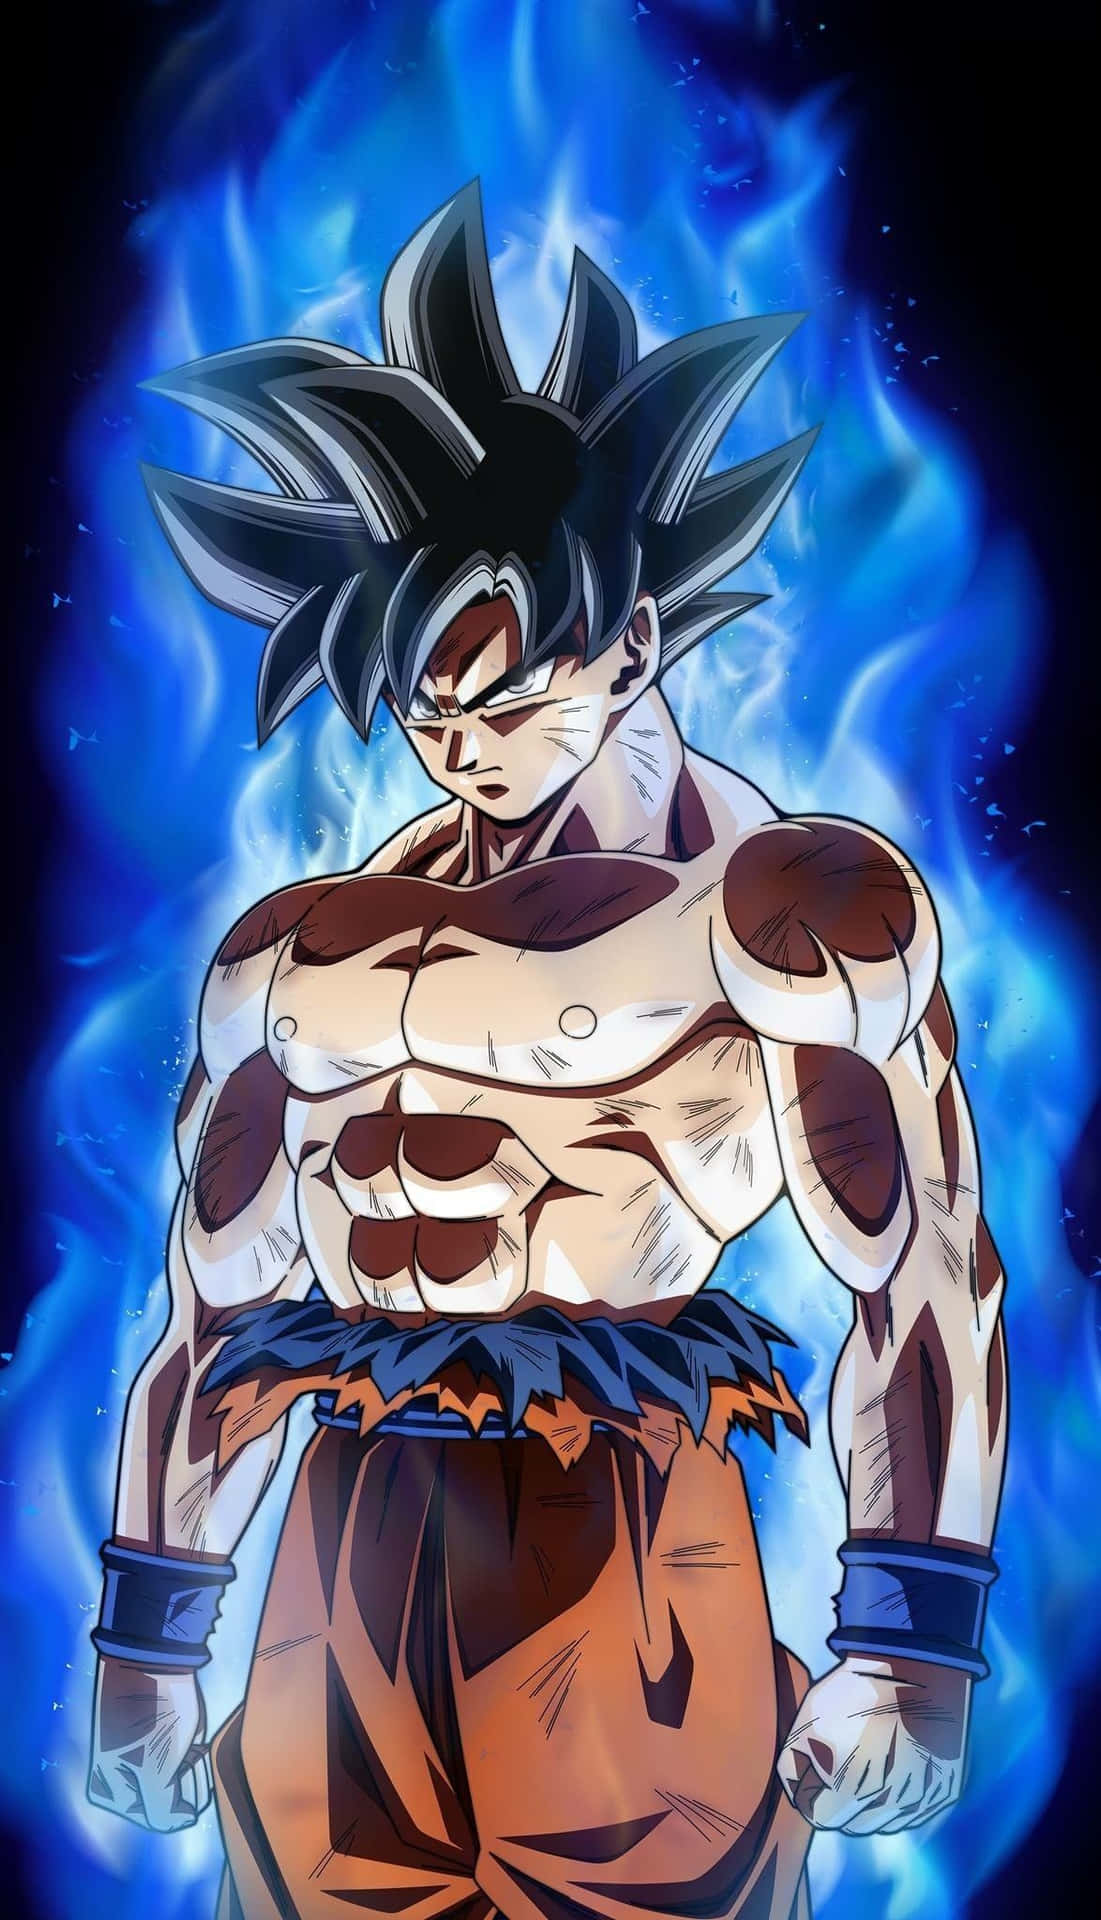 Master Goku Rampage Mode - A Vibrant Dragon Ball Super iPhone Wallpaper Wallpaper